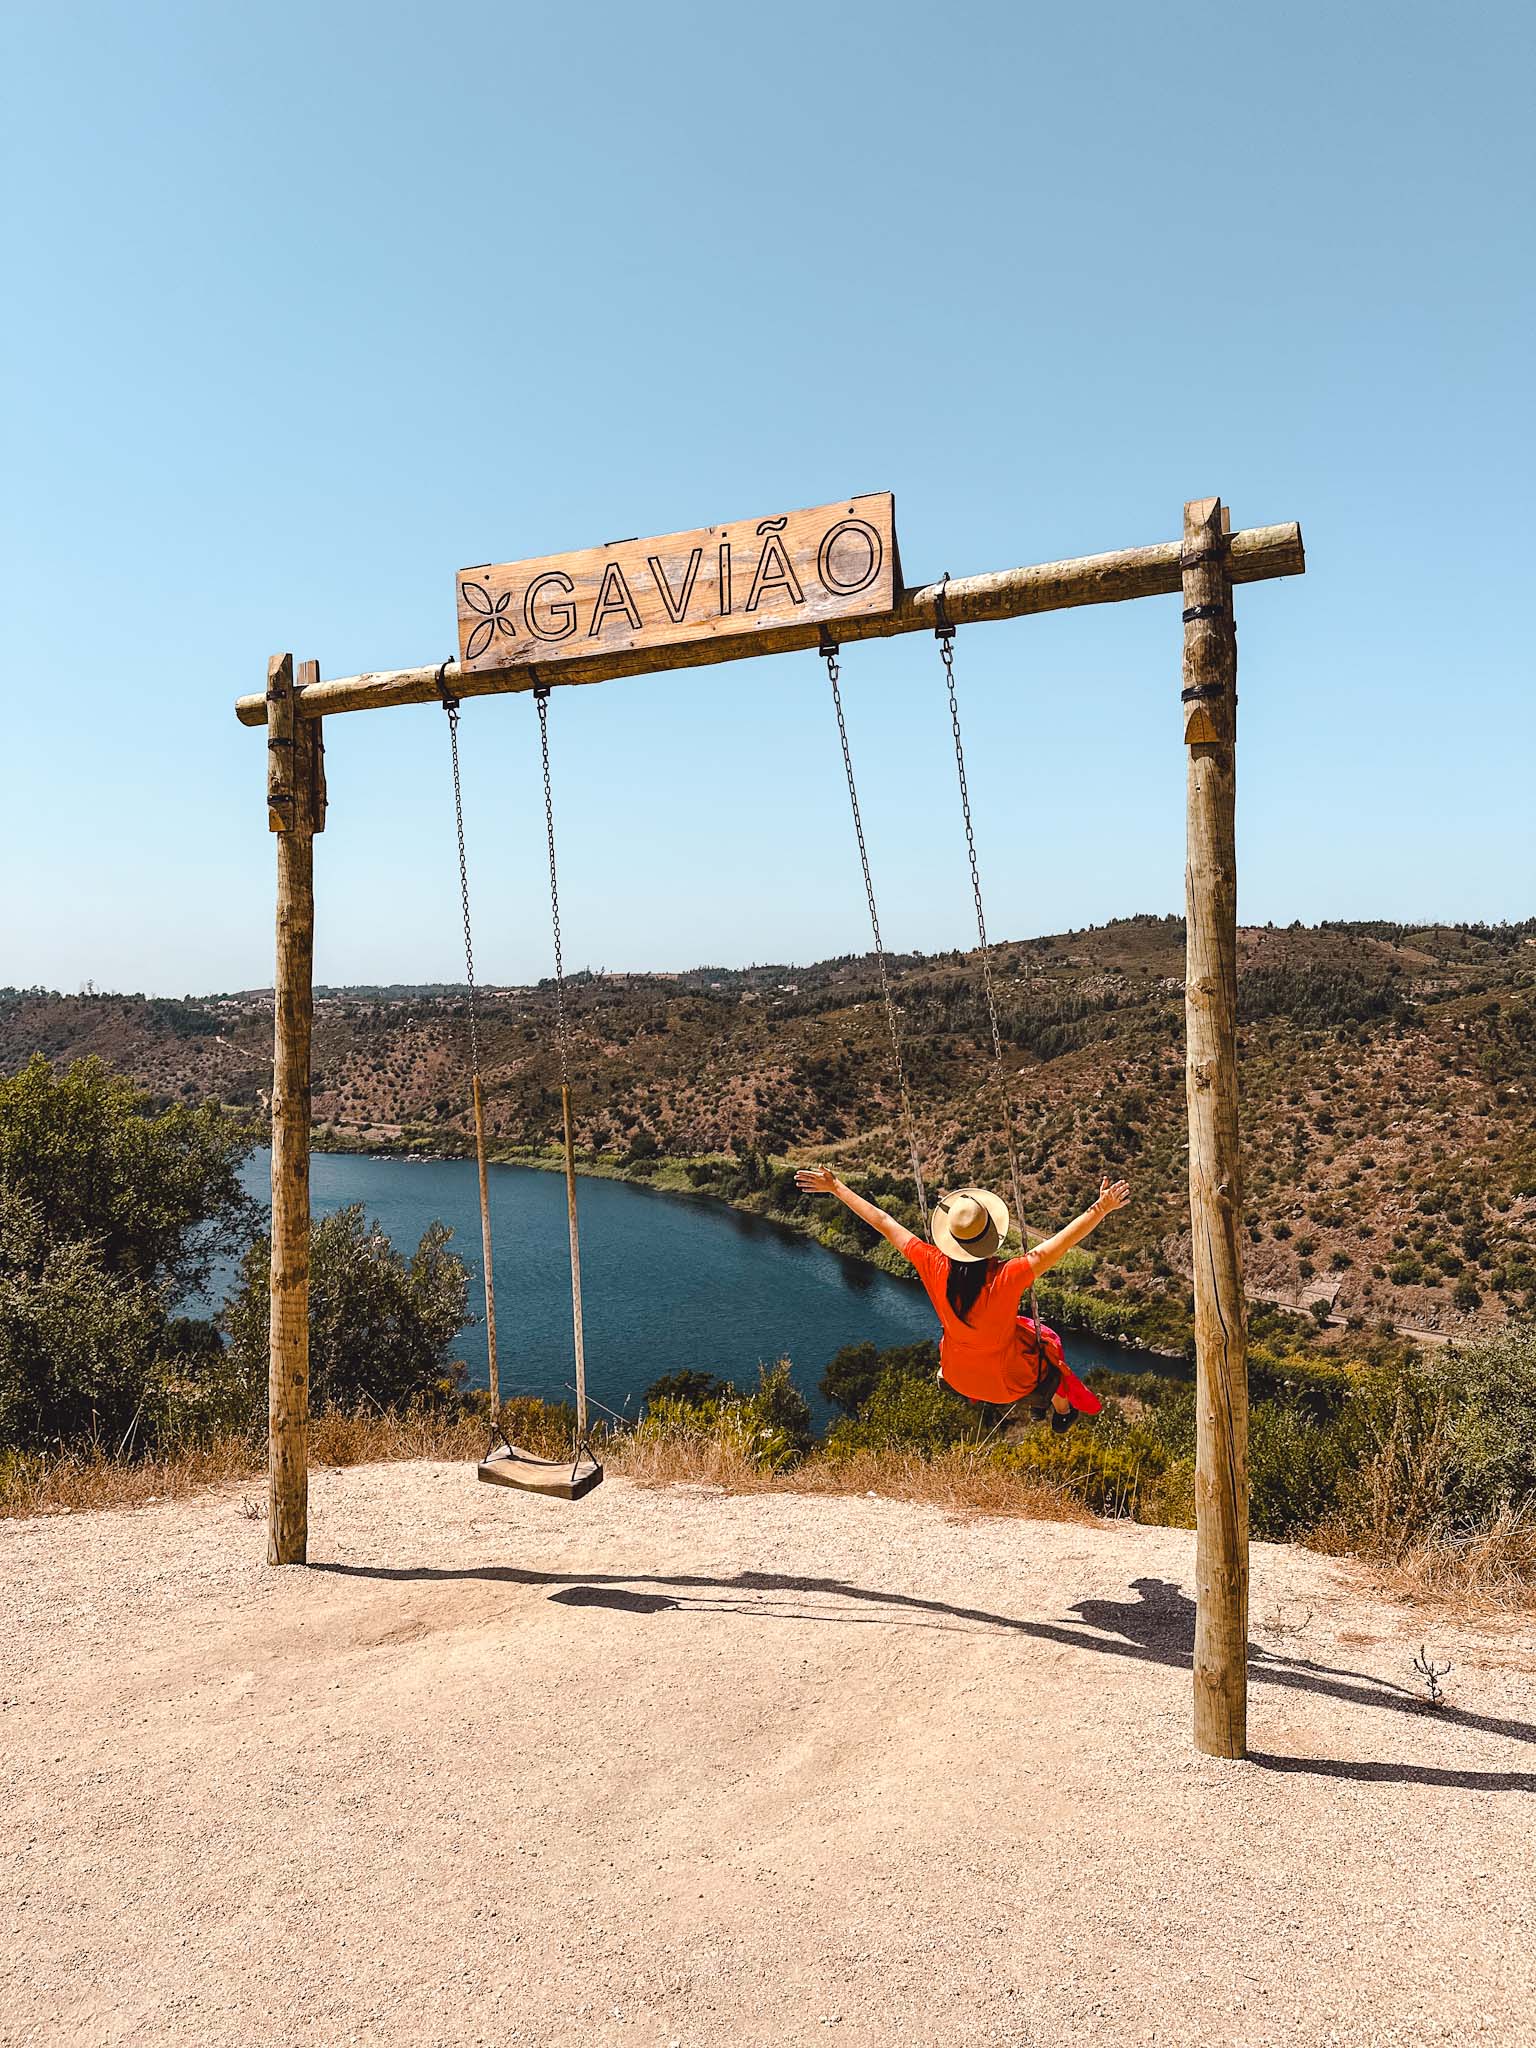 Swings in Portugal - Baloiço de Gavião